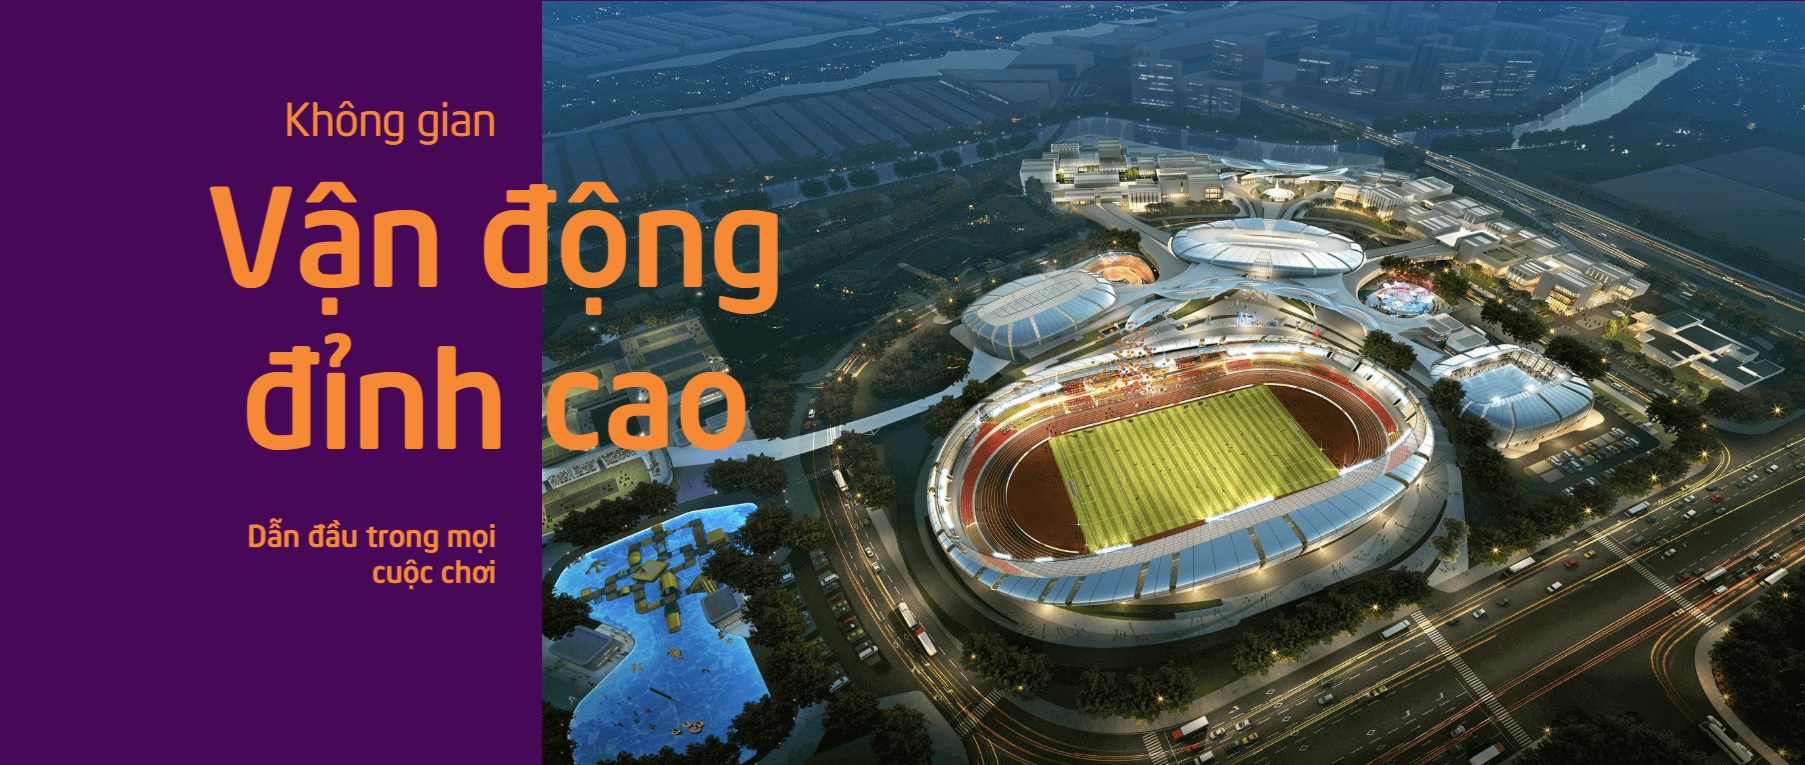 Saigon Sports City